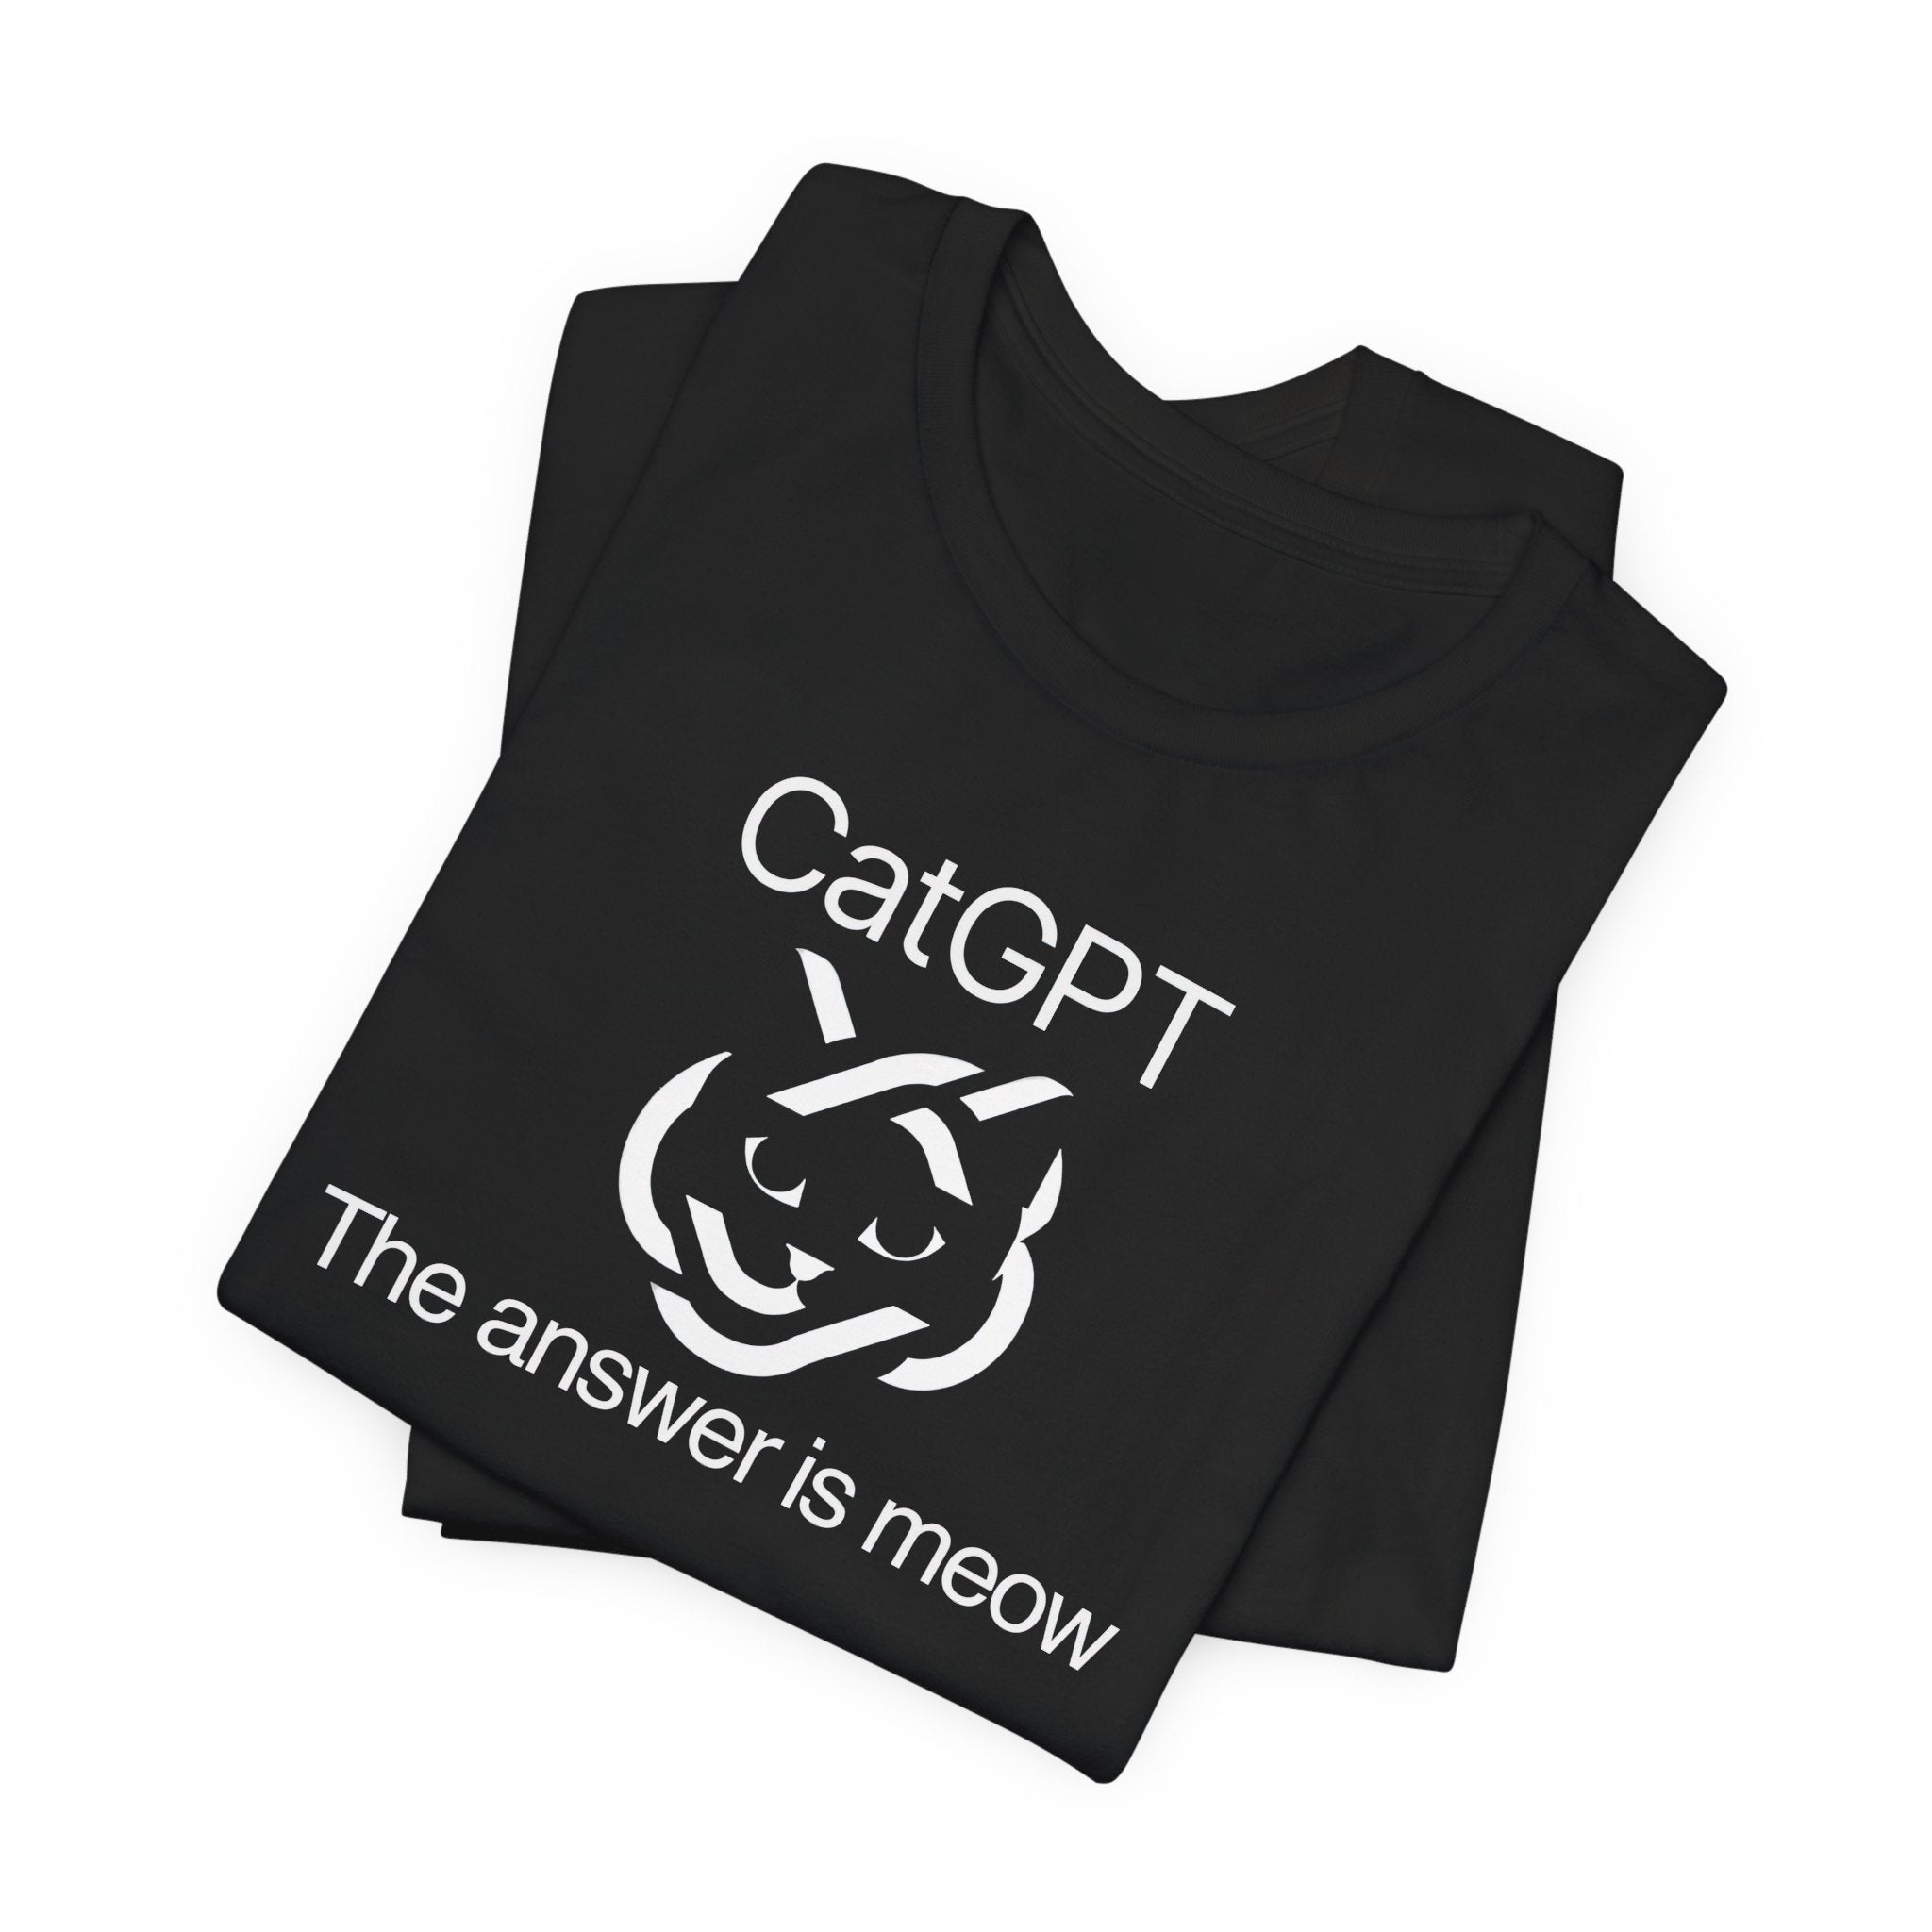 CatGPT Meow T-Shirt